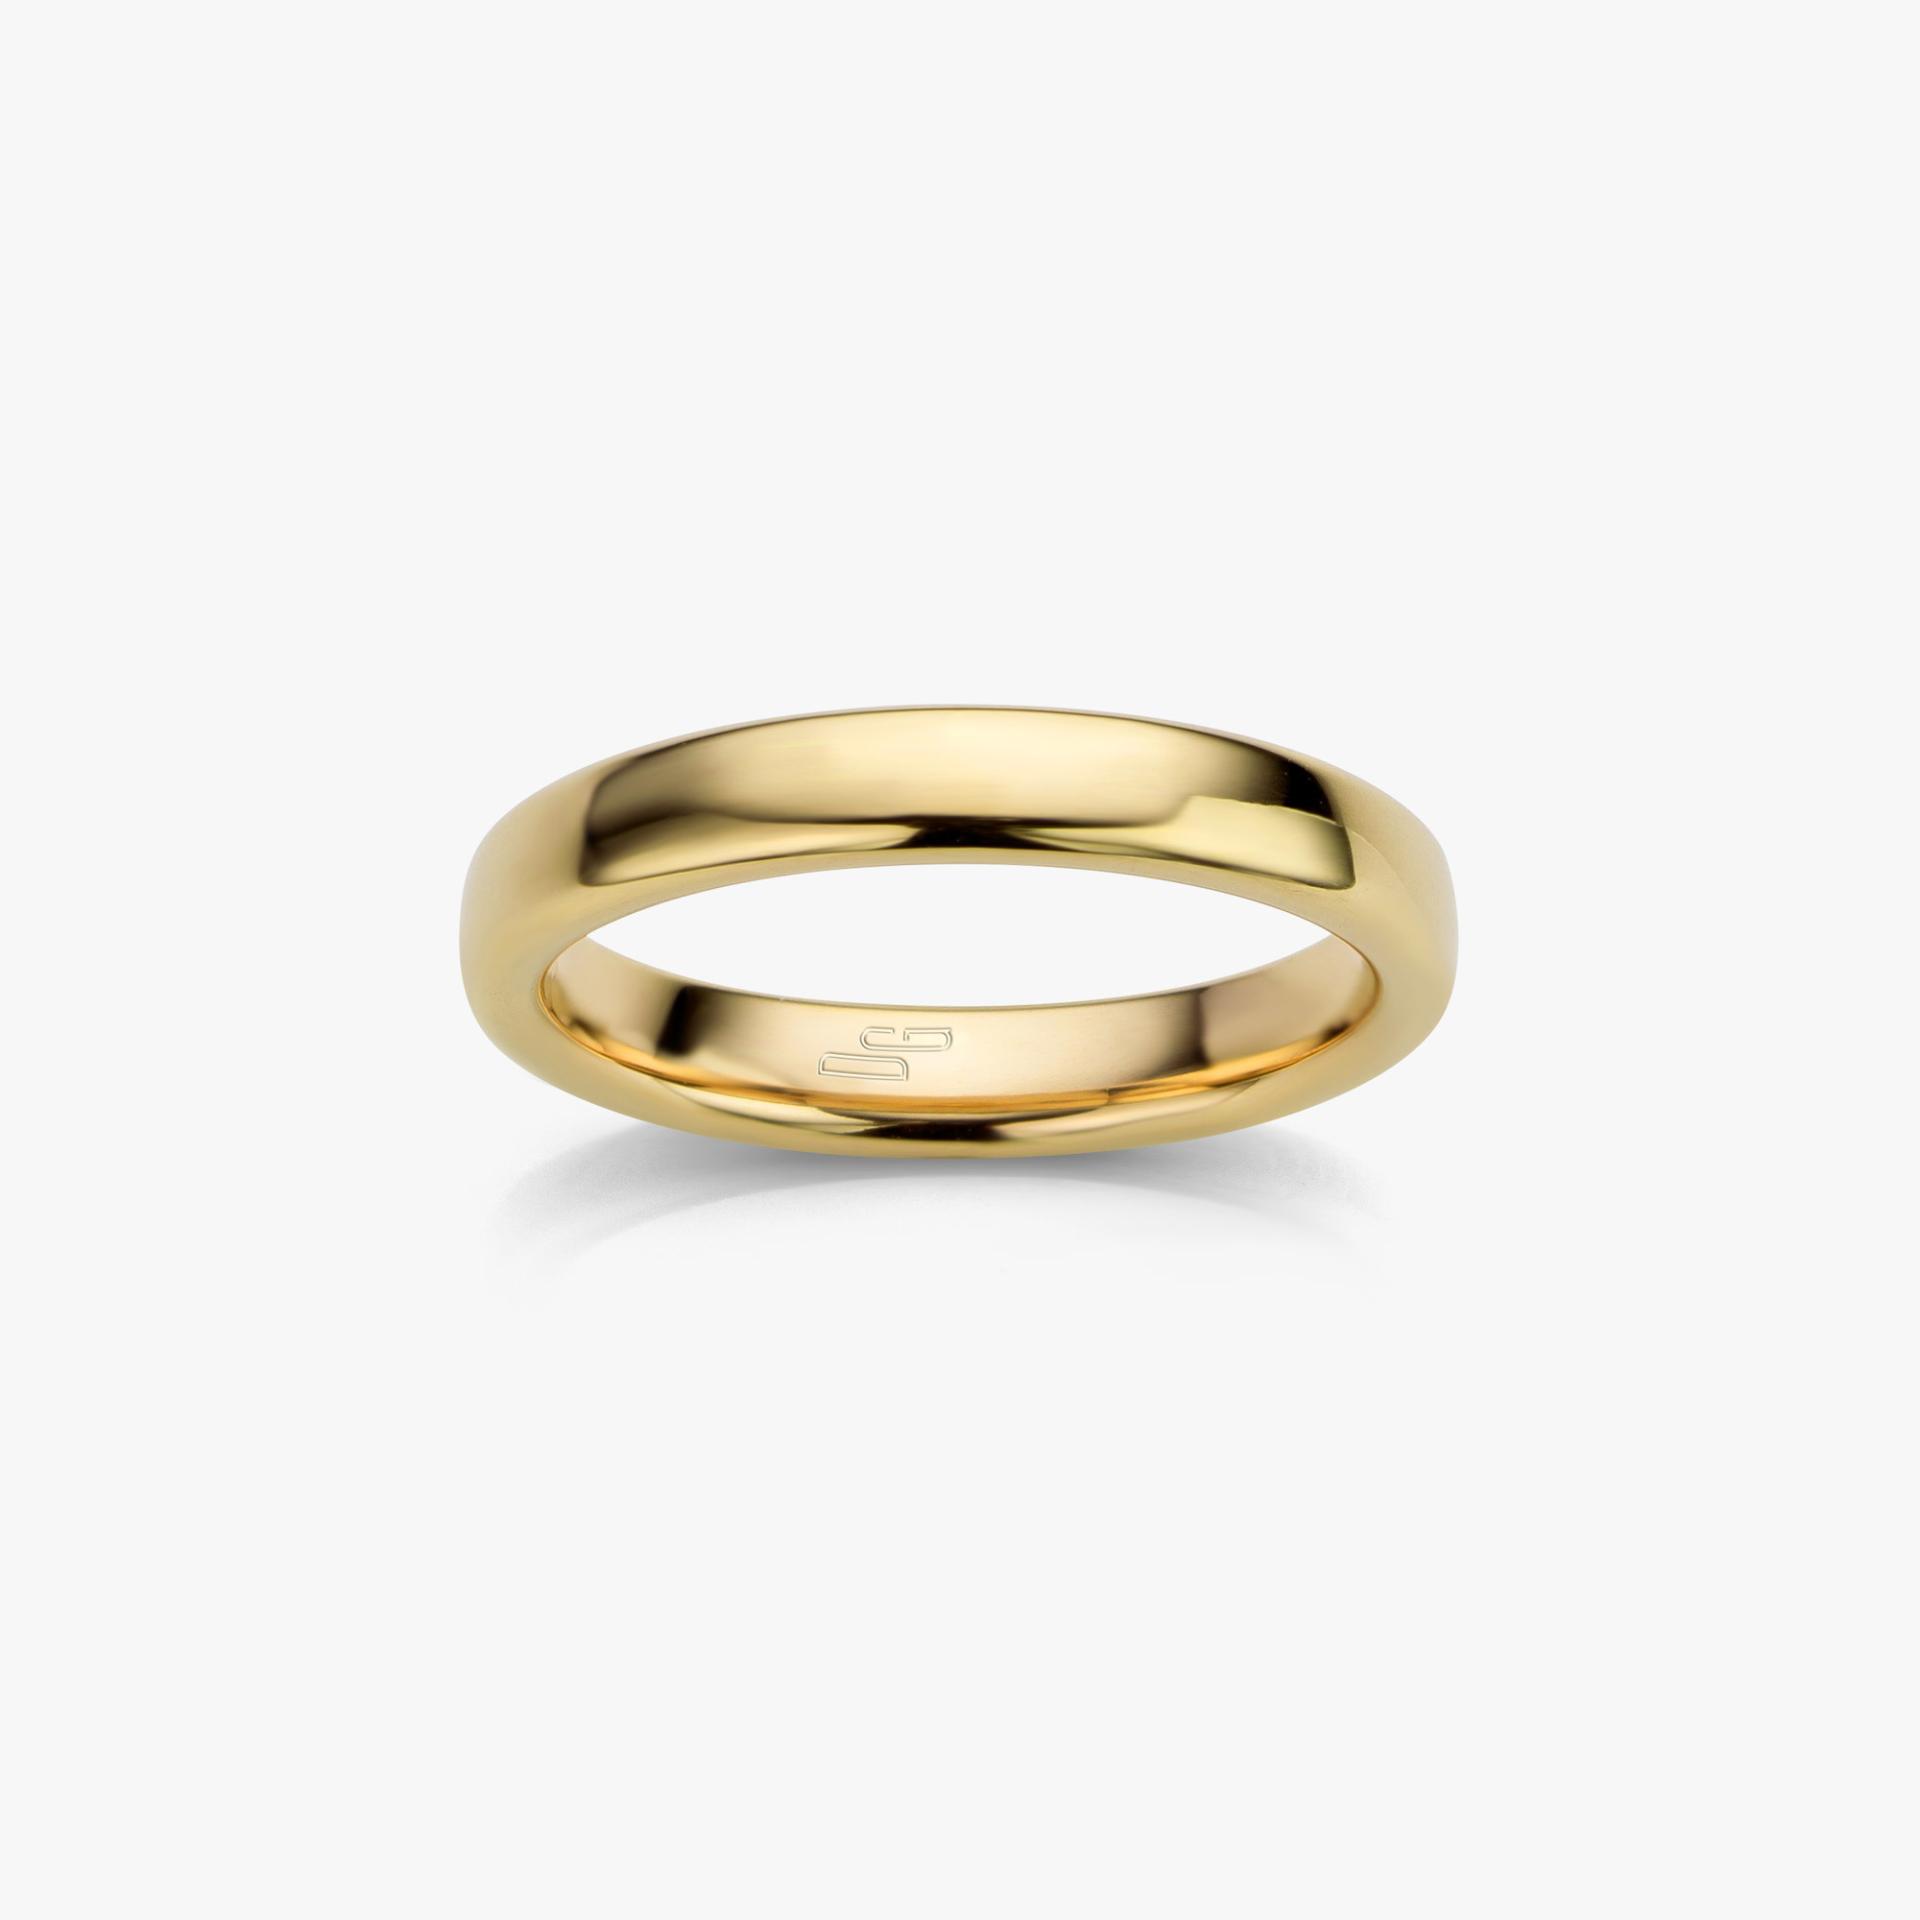 Wedding ring model Harmony made by Maison De Greef